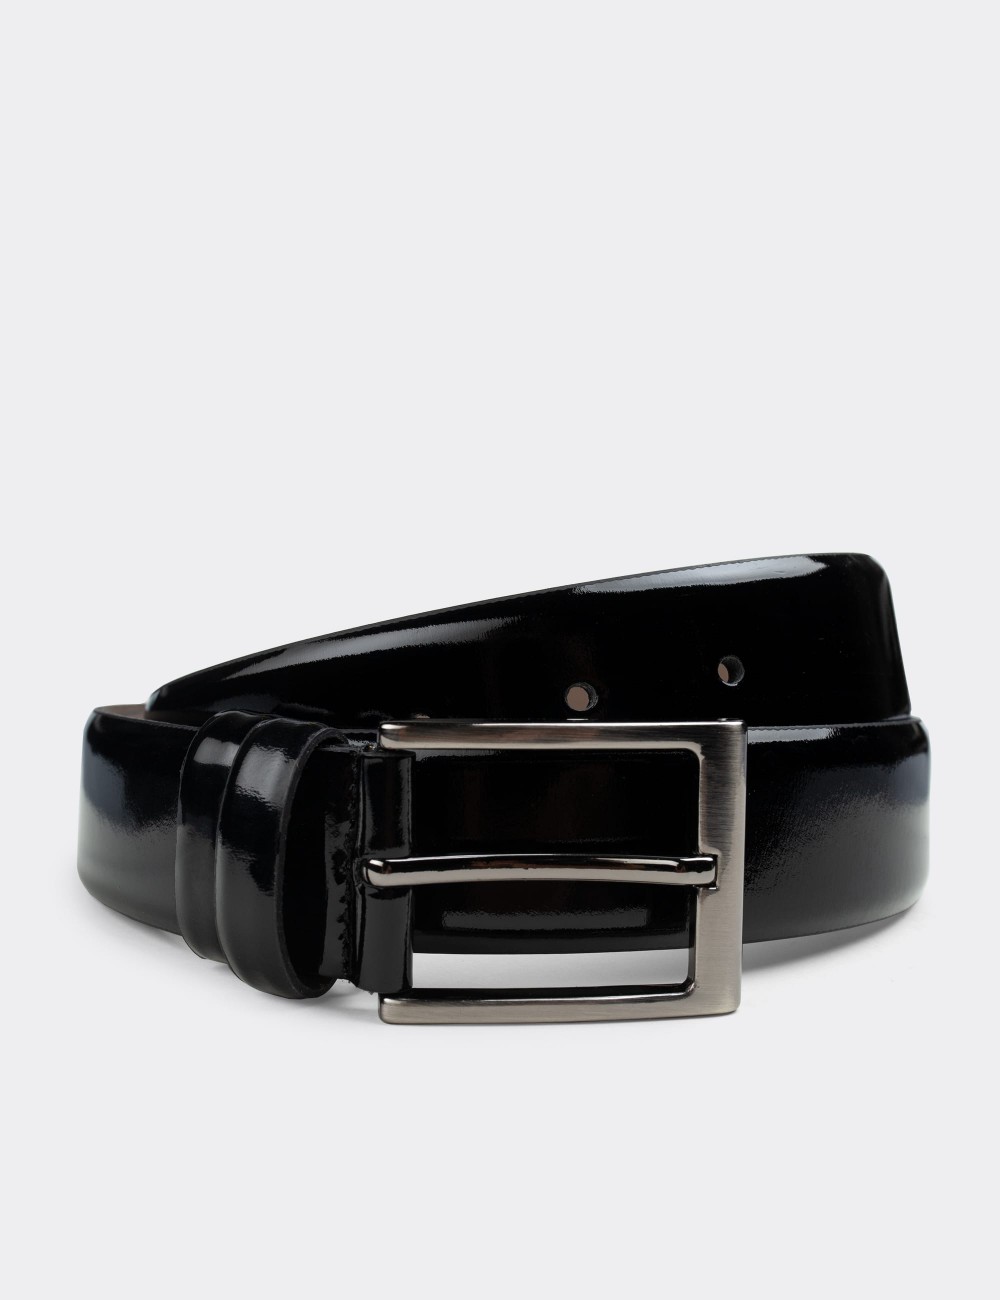 Patent Leather Black Men's Belt - K0100MSYHW01